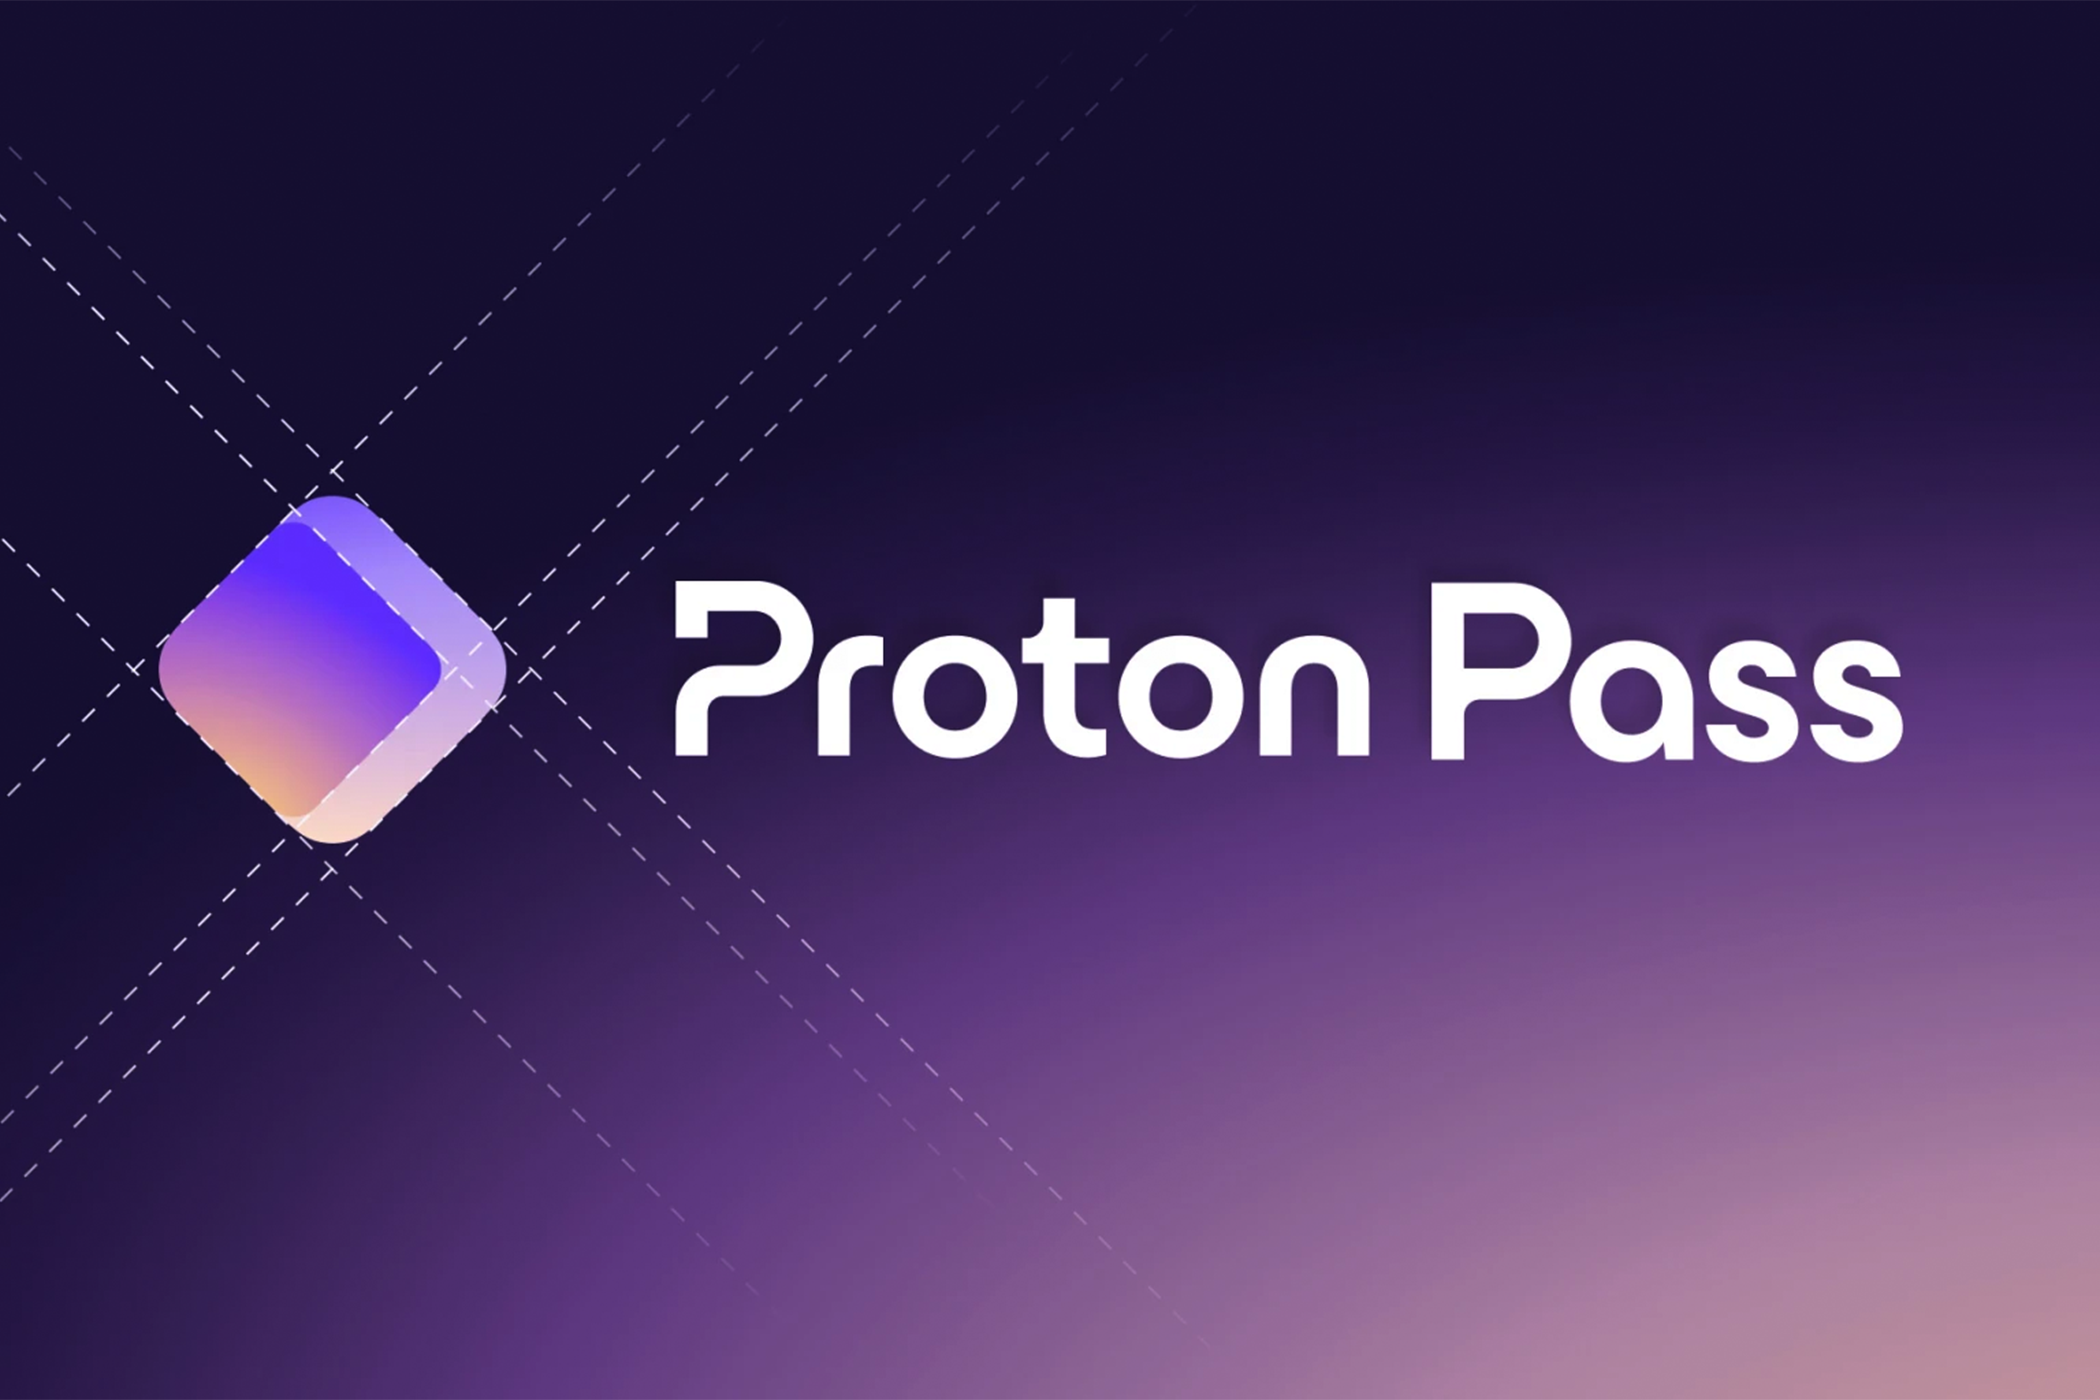 The Proton Pass logo on a purple background.